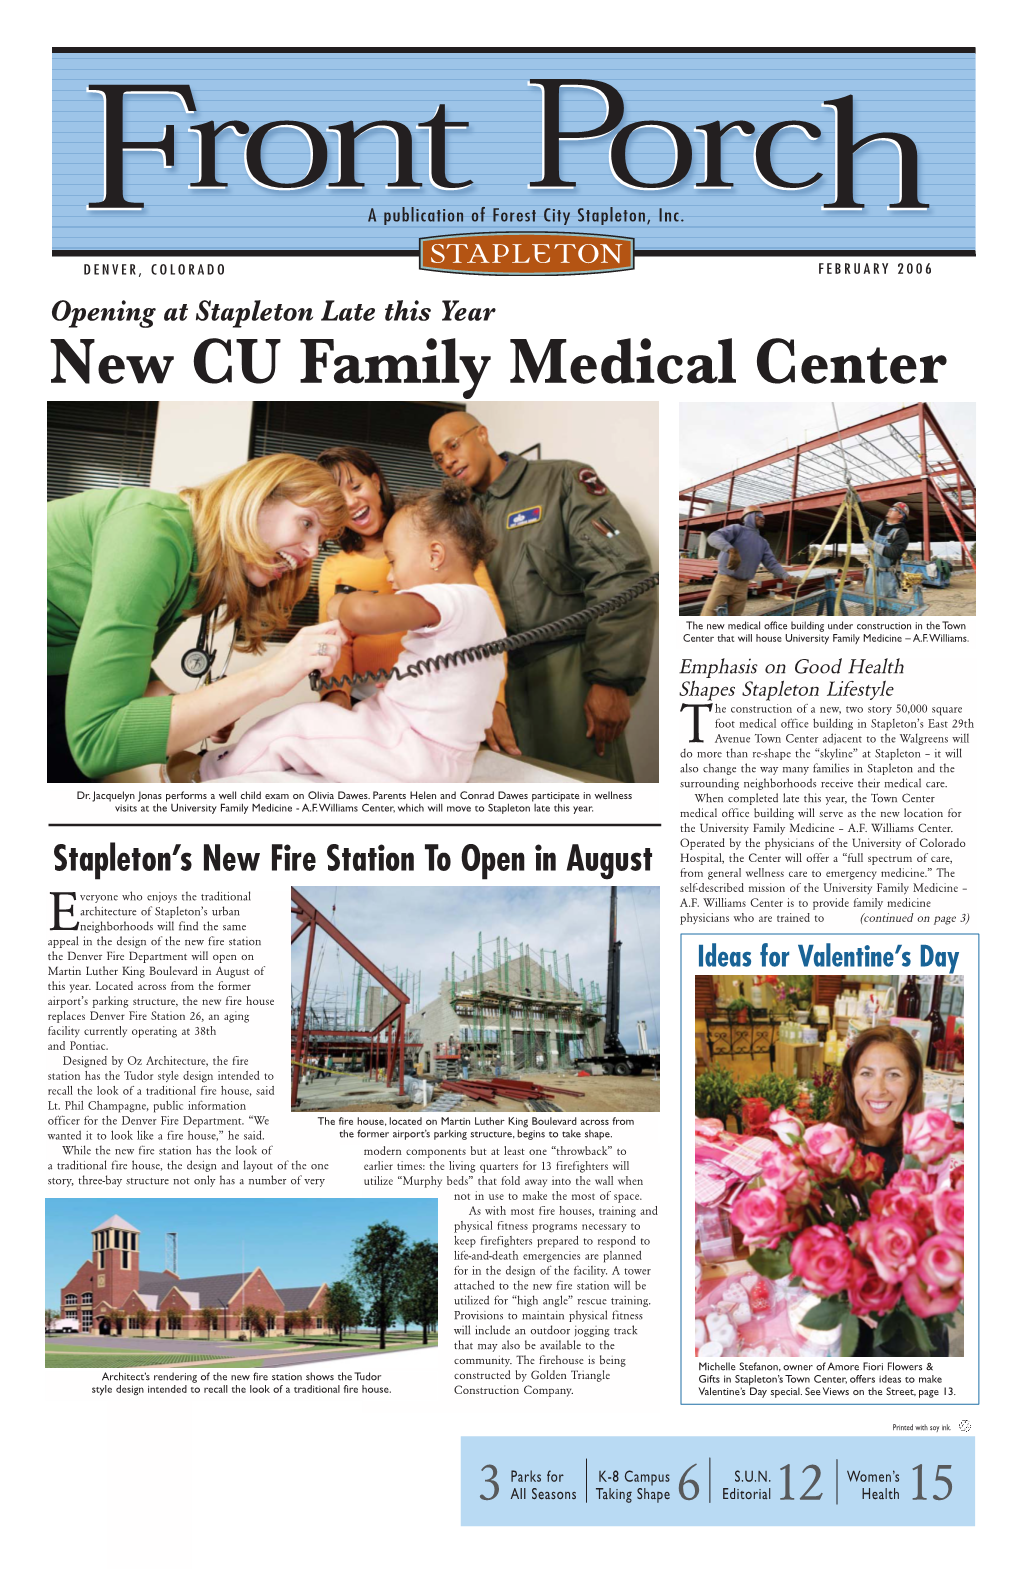 New CU Family Medical Center